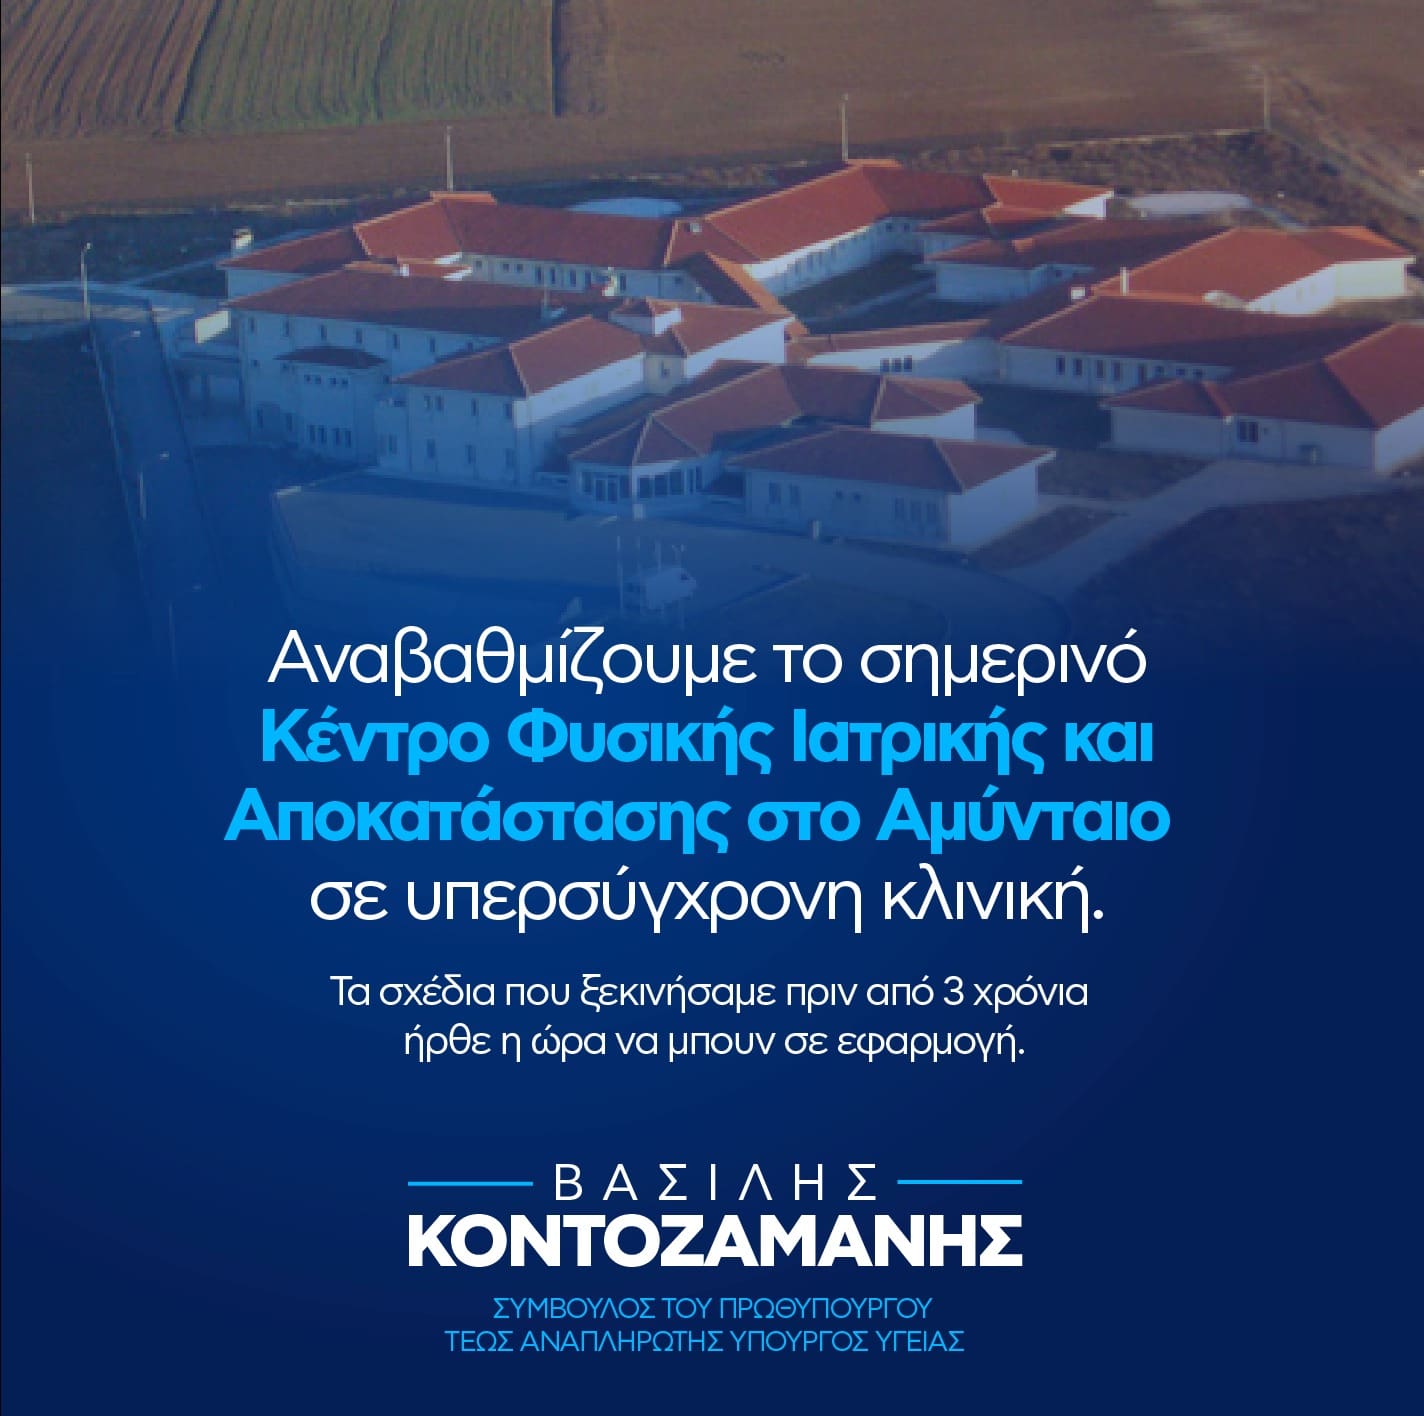 Eordaialive.com - Τα Νέα της Πτολεμαΐδας, Εορδαίας, Κοζάνης Την Δυτική Μακεδονία επισκέφθηκε ο σύμβουλος υγείας του Πρωθυπουργού. Η ανακοίνωσή του.